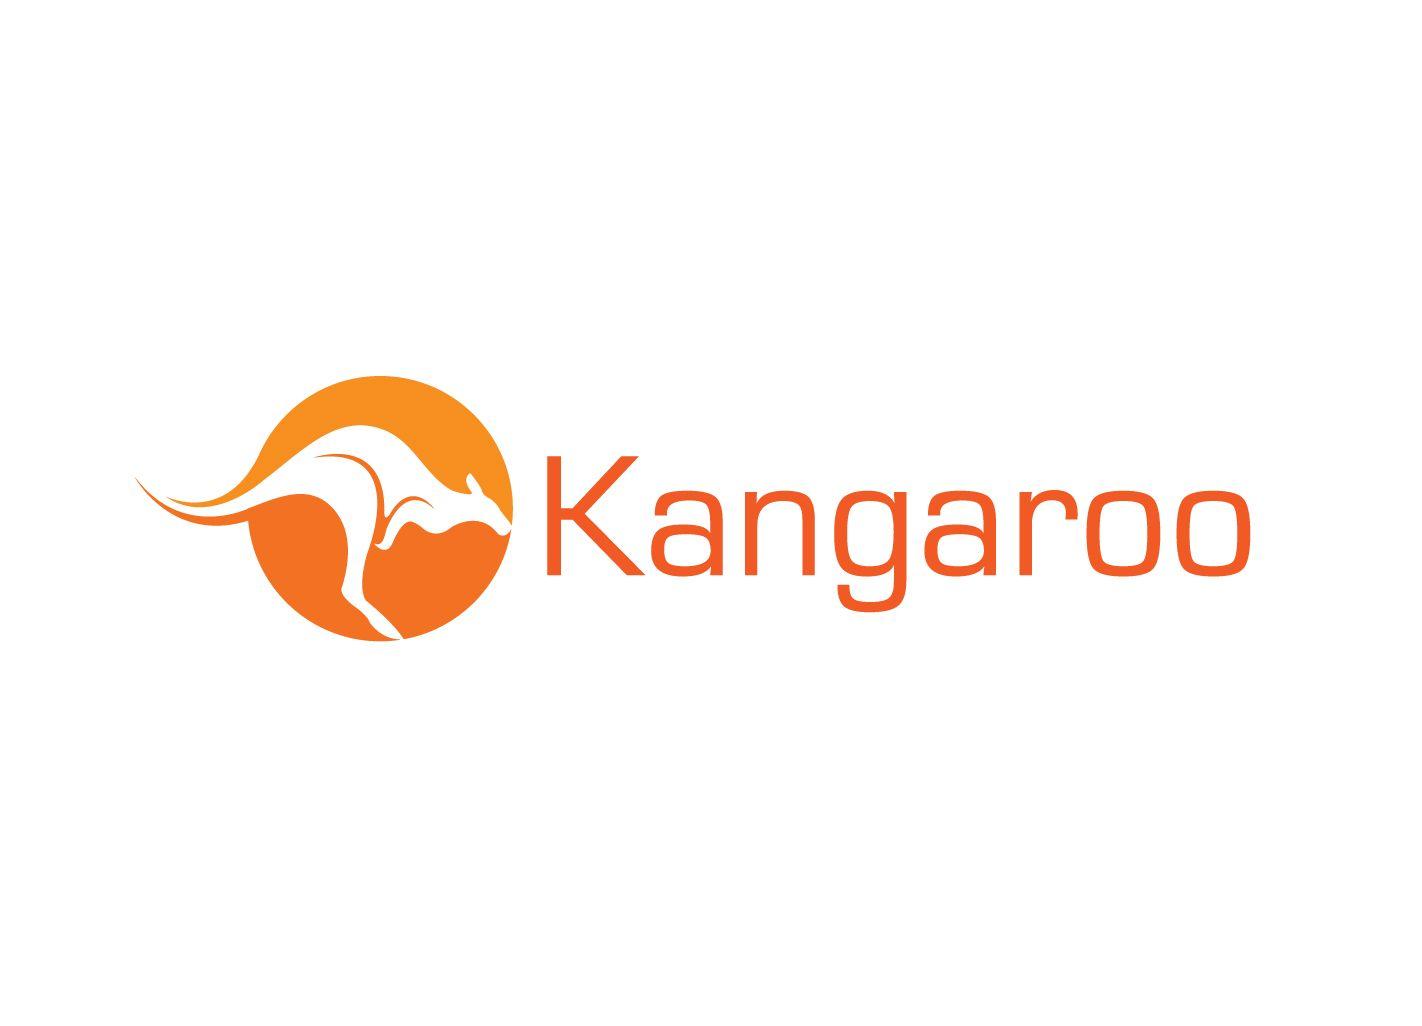 Kangaroo Company Logo - Upmarket, Playful, It Company Logo Design for Kangaroo by hih7 ...